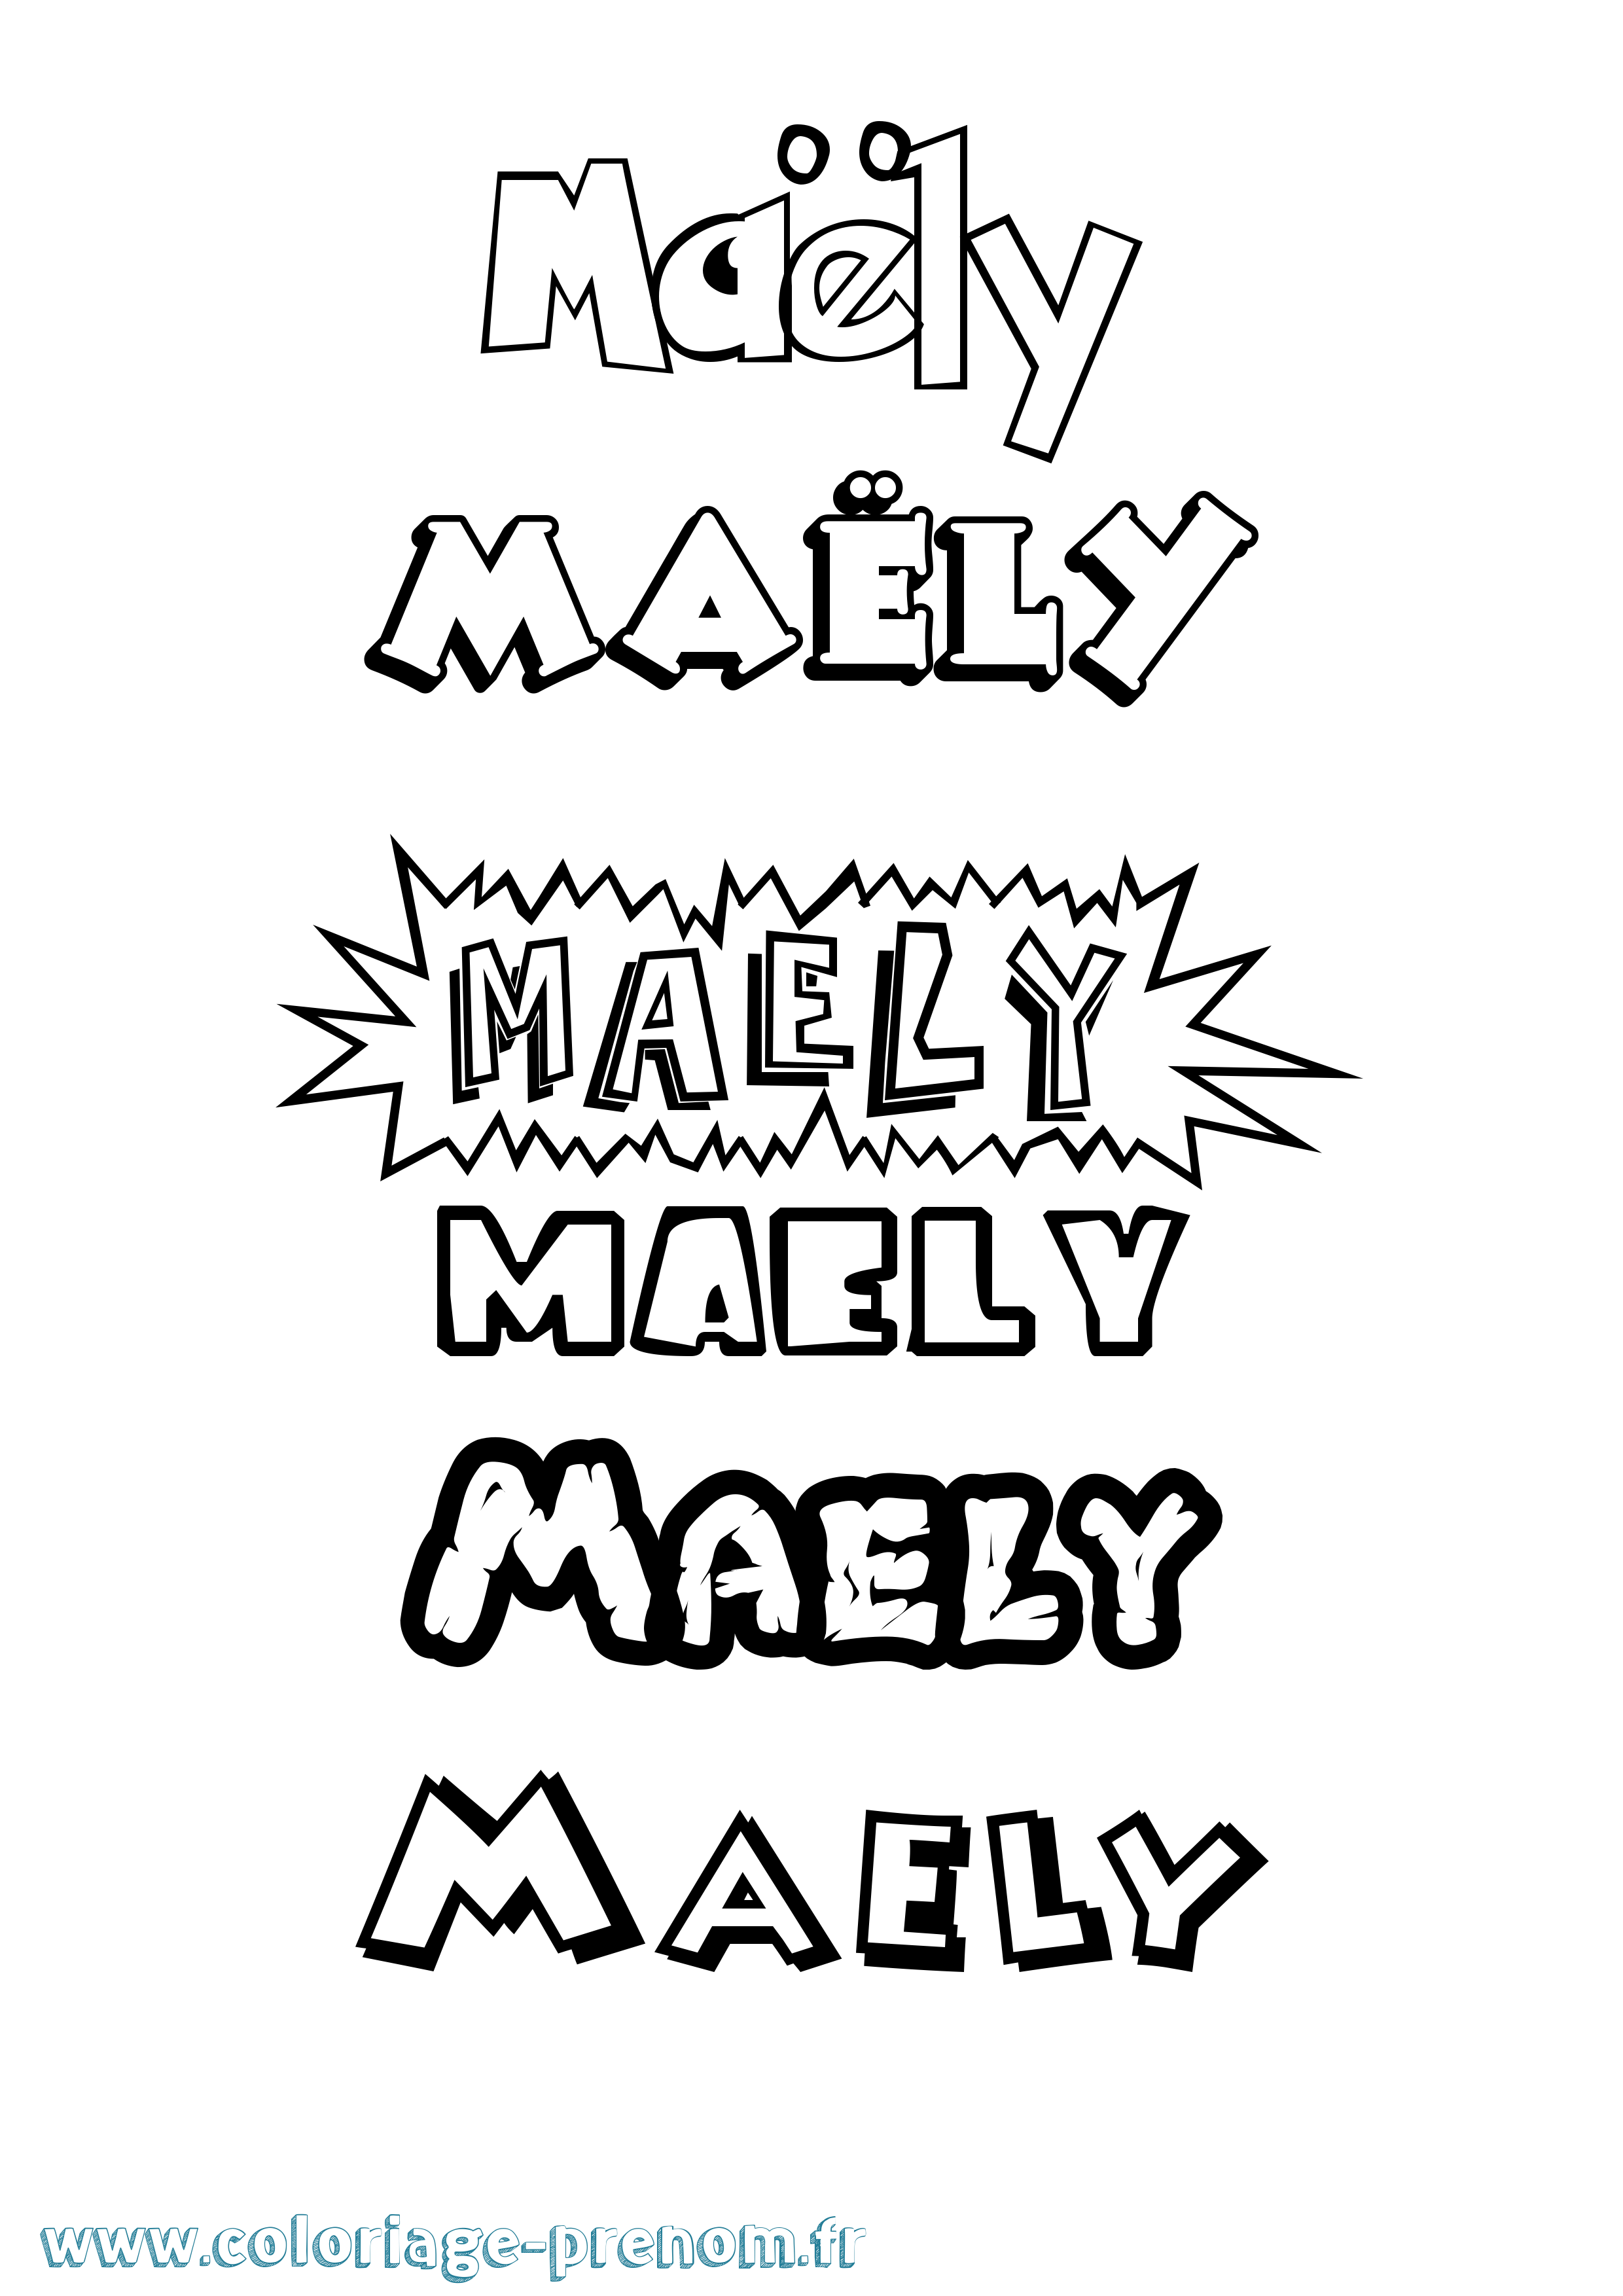 Coloriage prénom Maëly